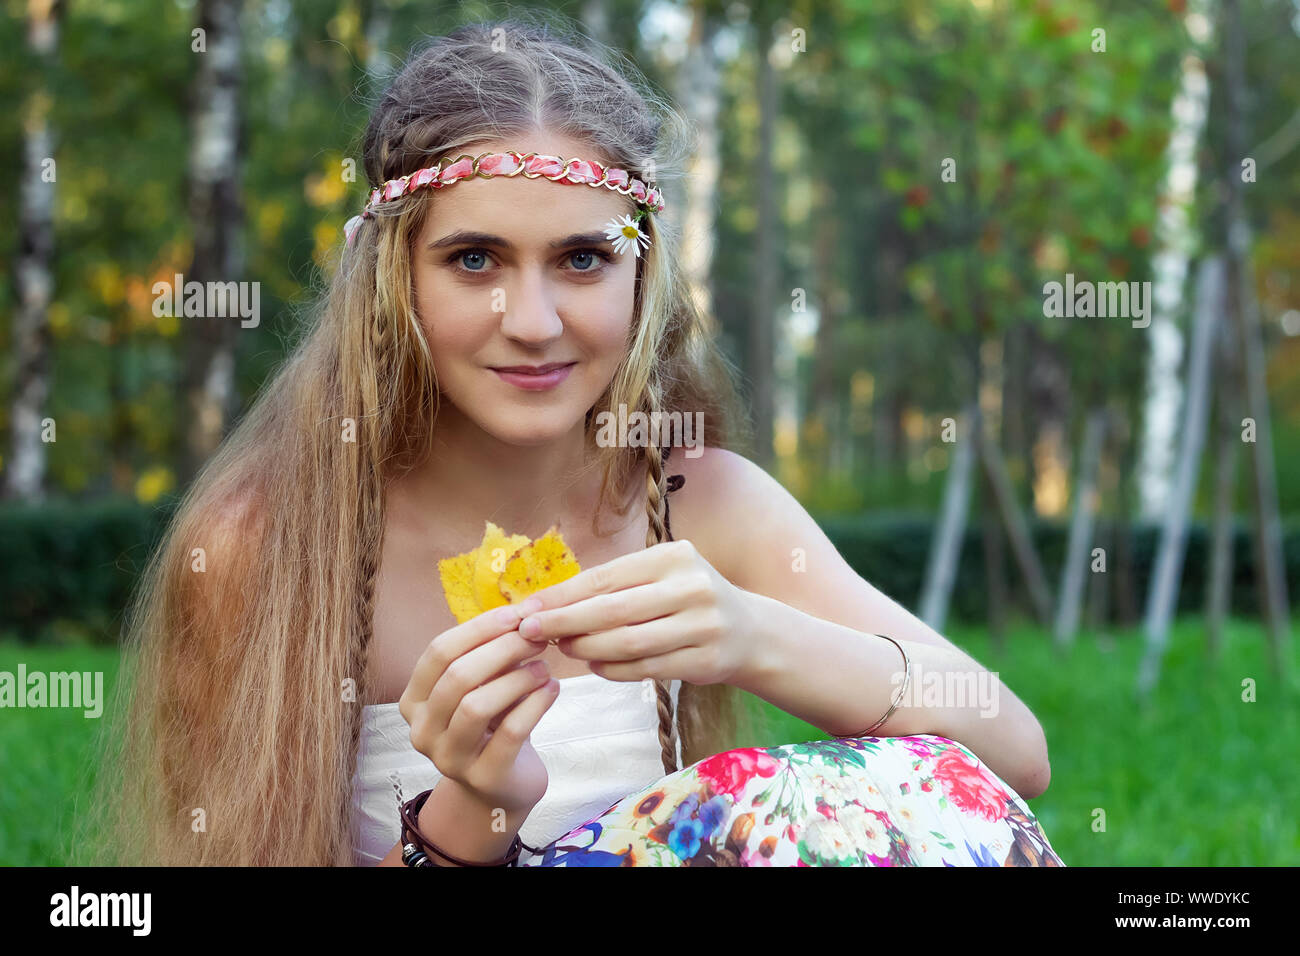 hippie girl portrait flowers   romantic vintage  lifestyle Stock Photo